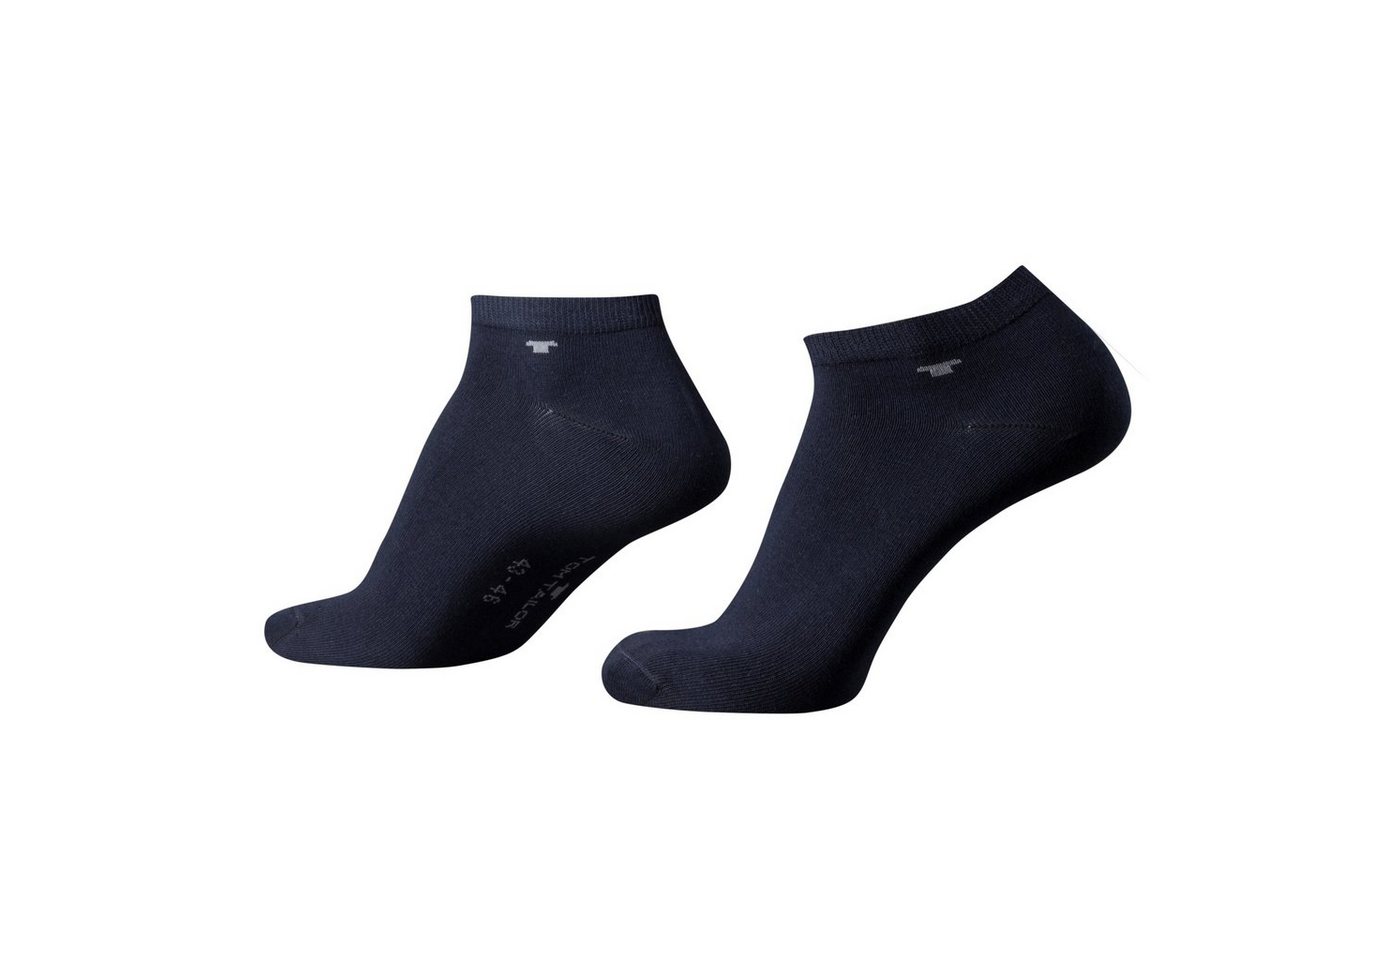 TOM TAILOR Socken 9415545038 Tom Tailor 4 Paar Sneaker Socken dunkel-blau Mehrpack invisible Strümpfe Socks navy Füsslinge 9415 von TOM TAILOR